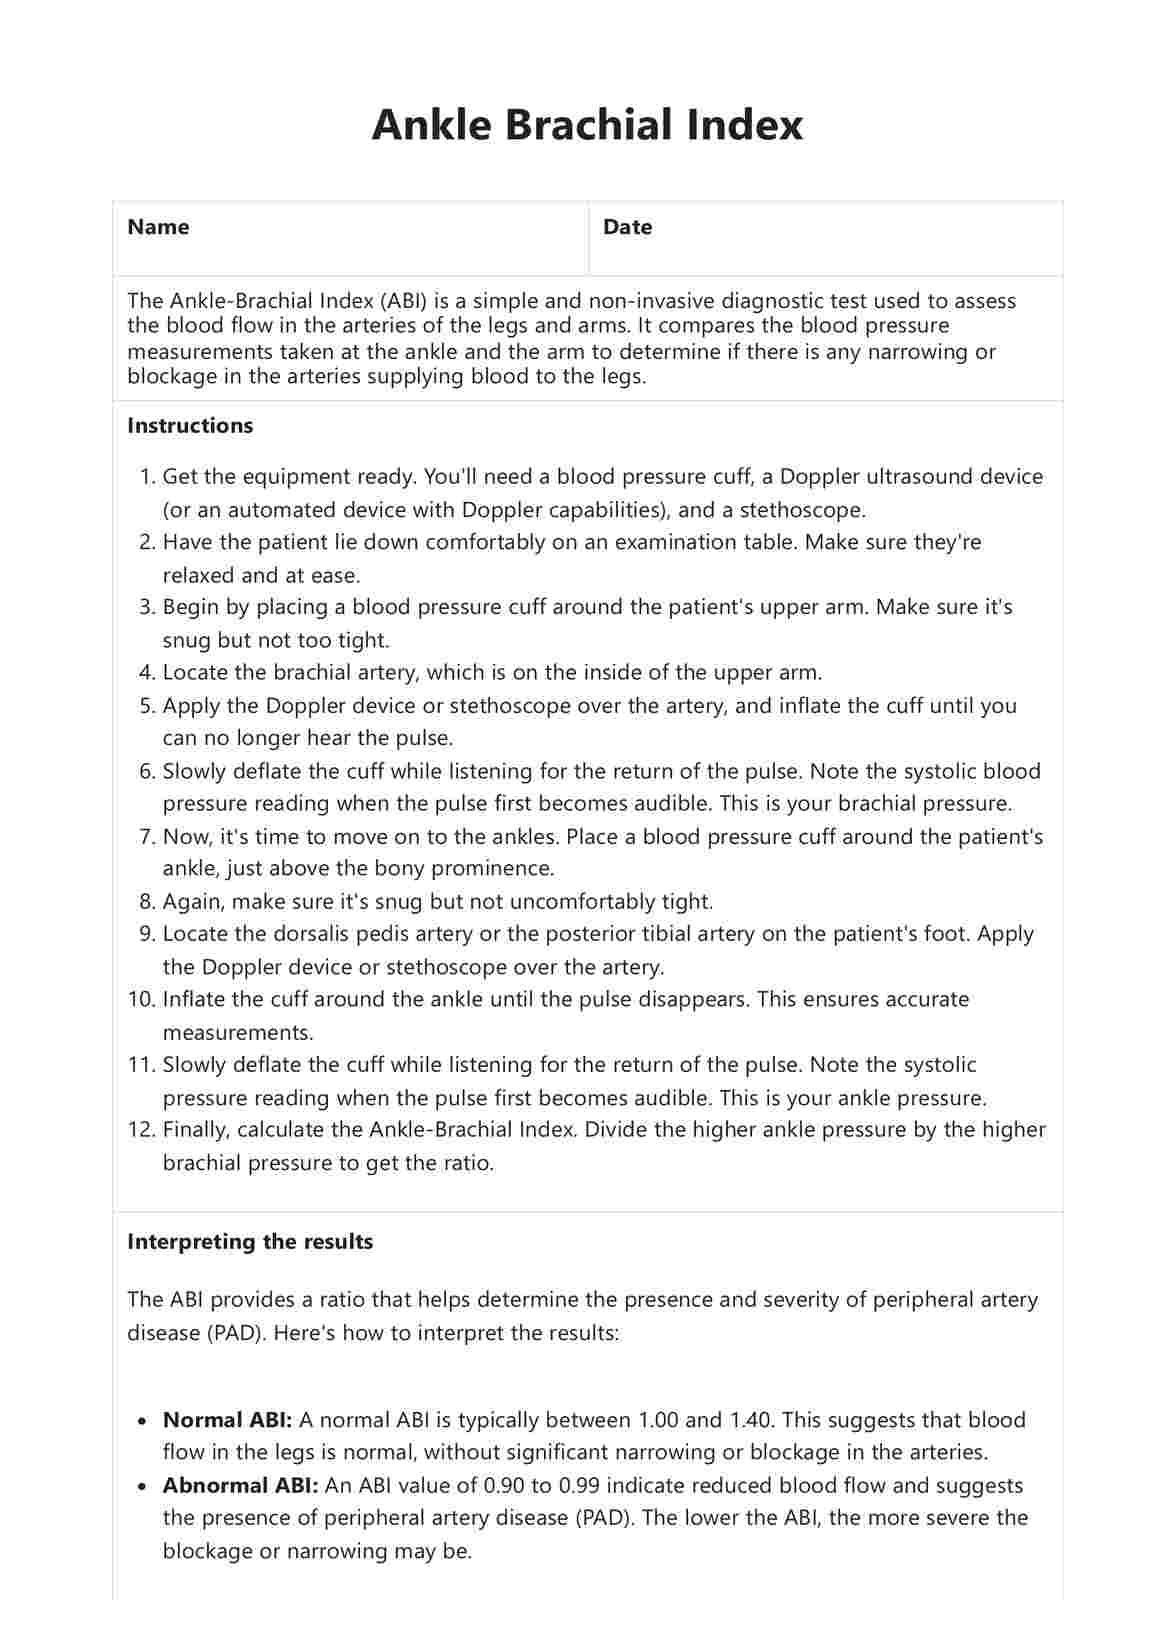 Ankle Brachial Index PDF Example